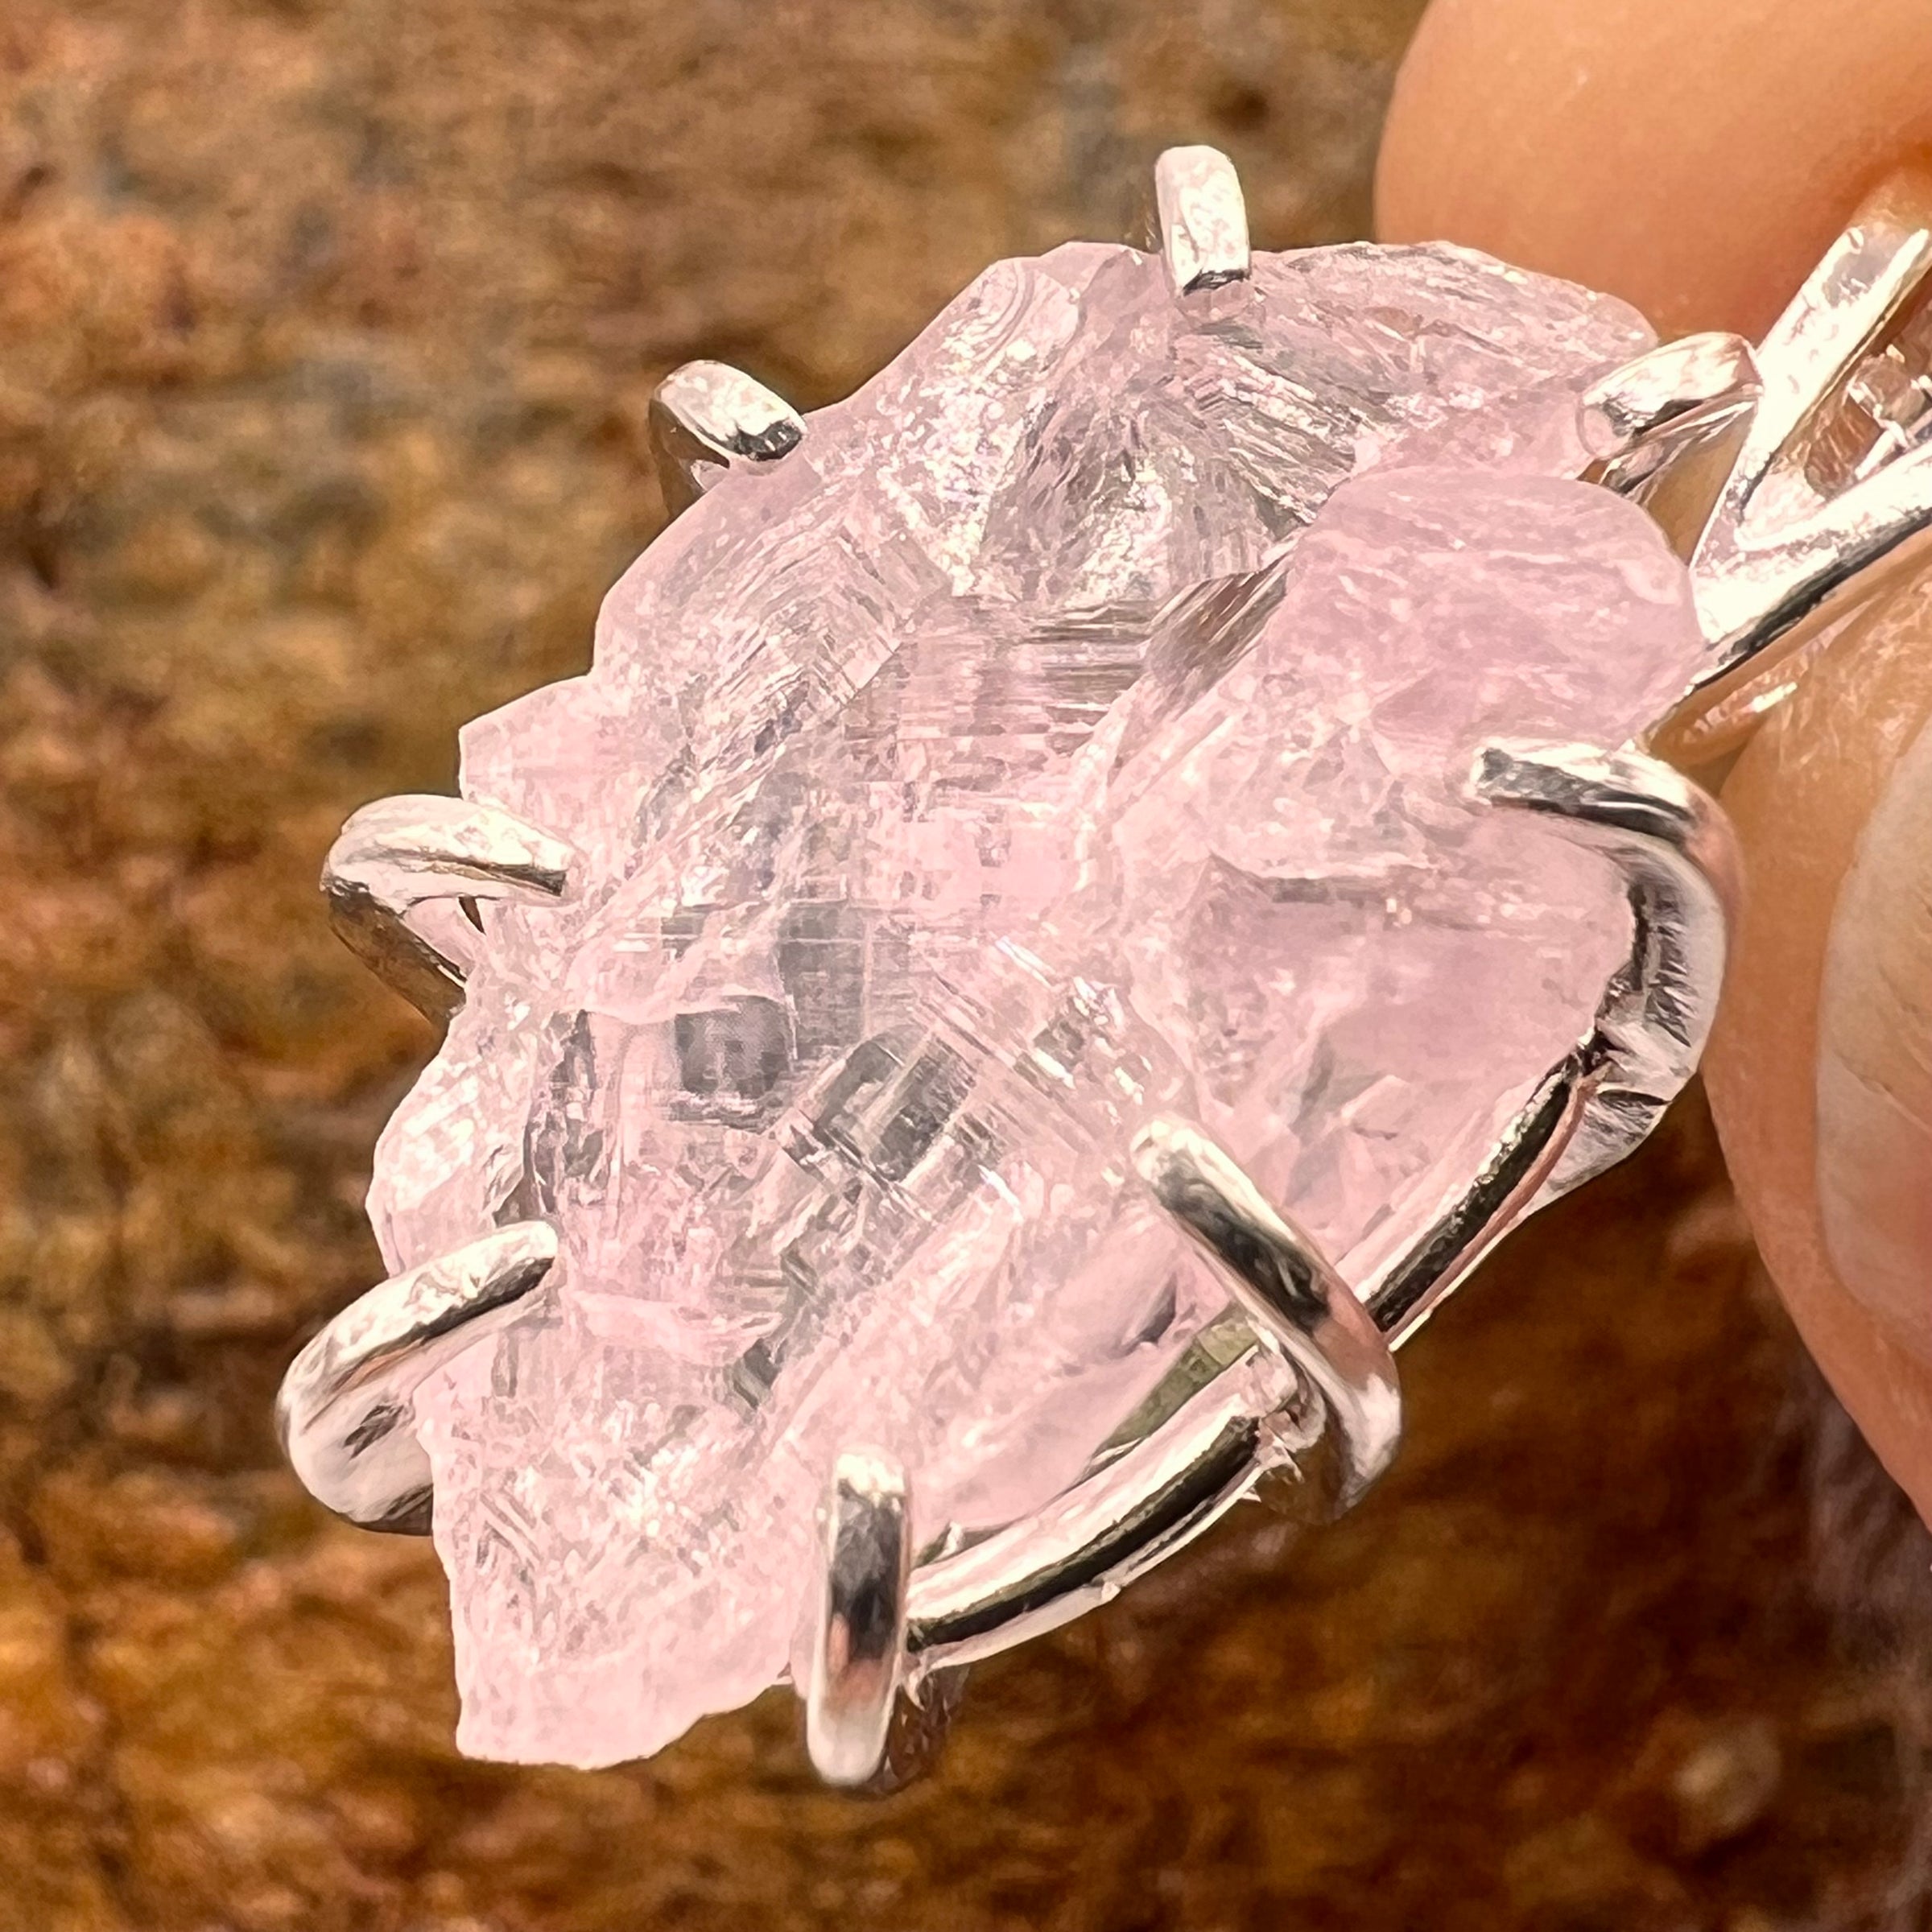 Crystallized Rose Quartz & Moldavite Necklace Sterling #10